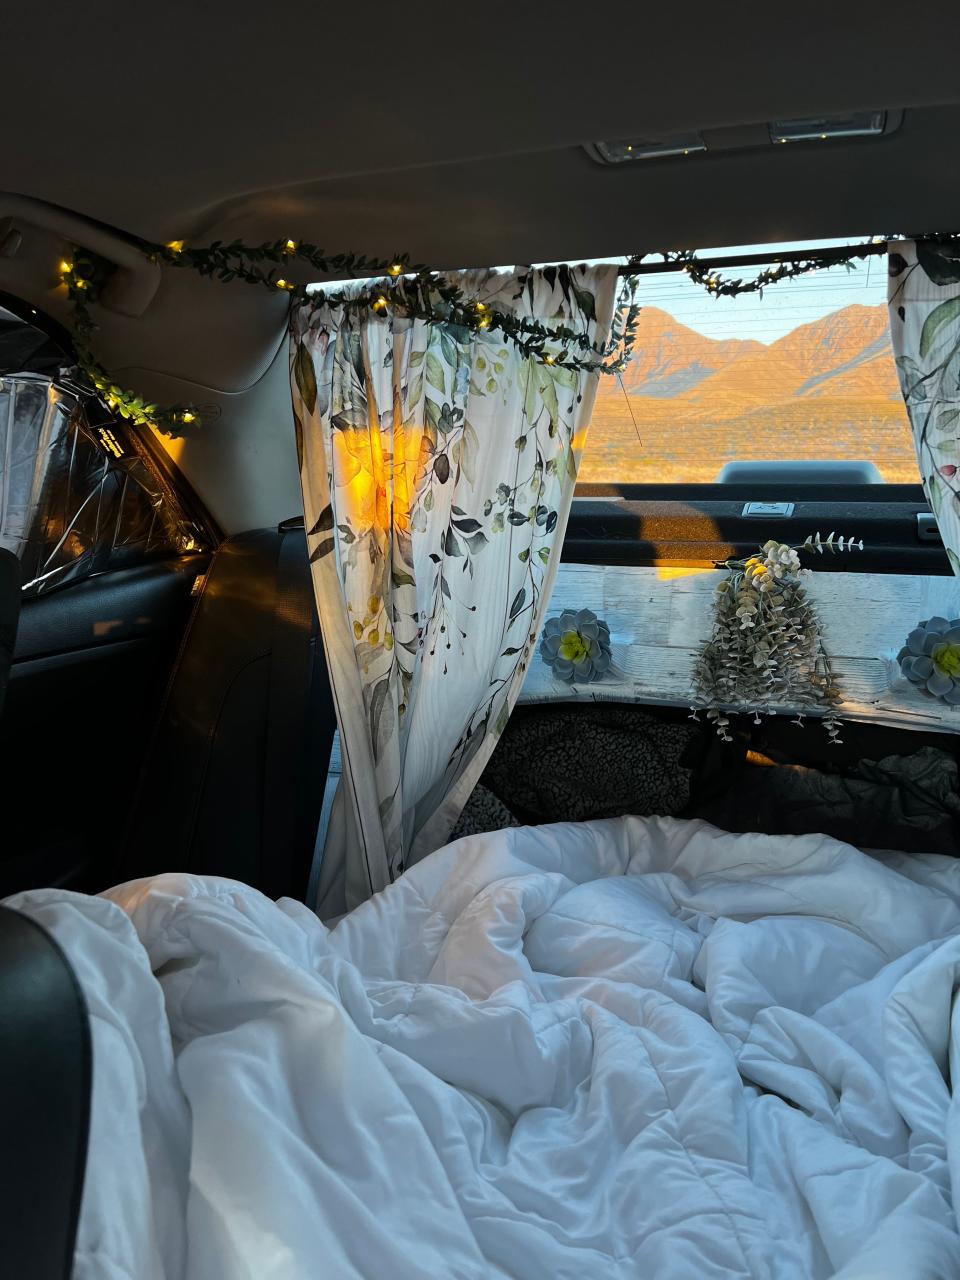 The inside of Monica's car where she sleeps.